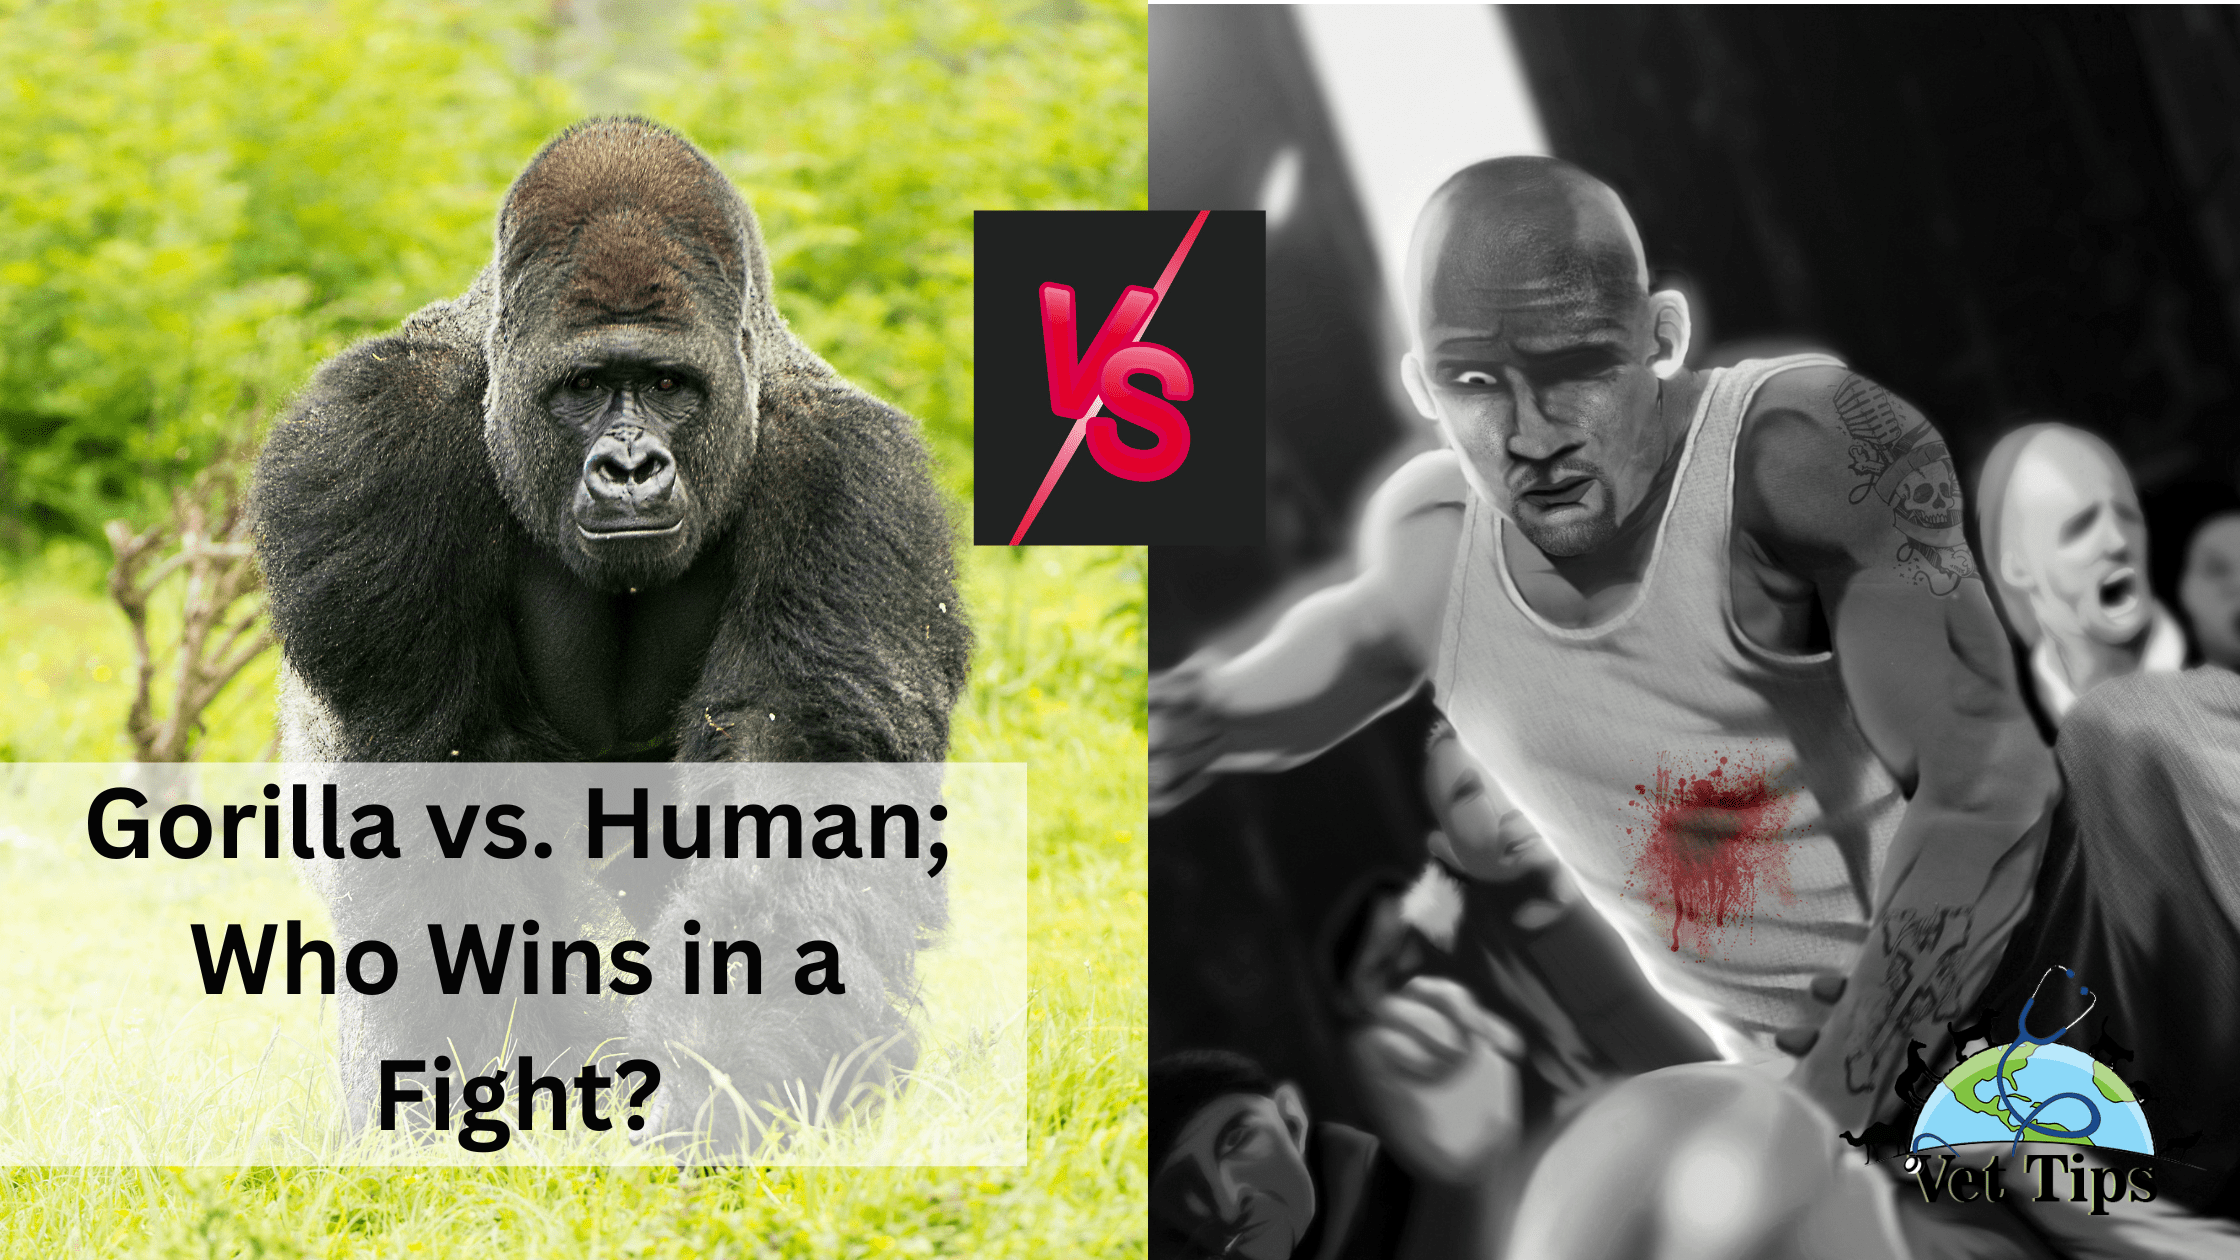 Gorilla Vs Human - Who Wins in a Fight?